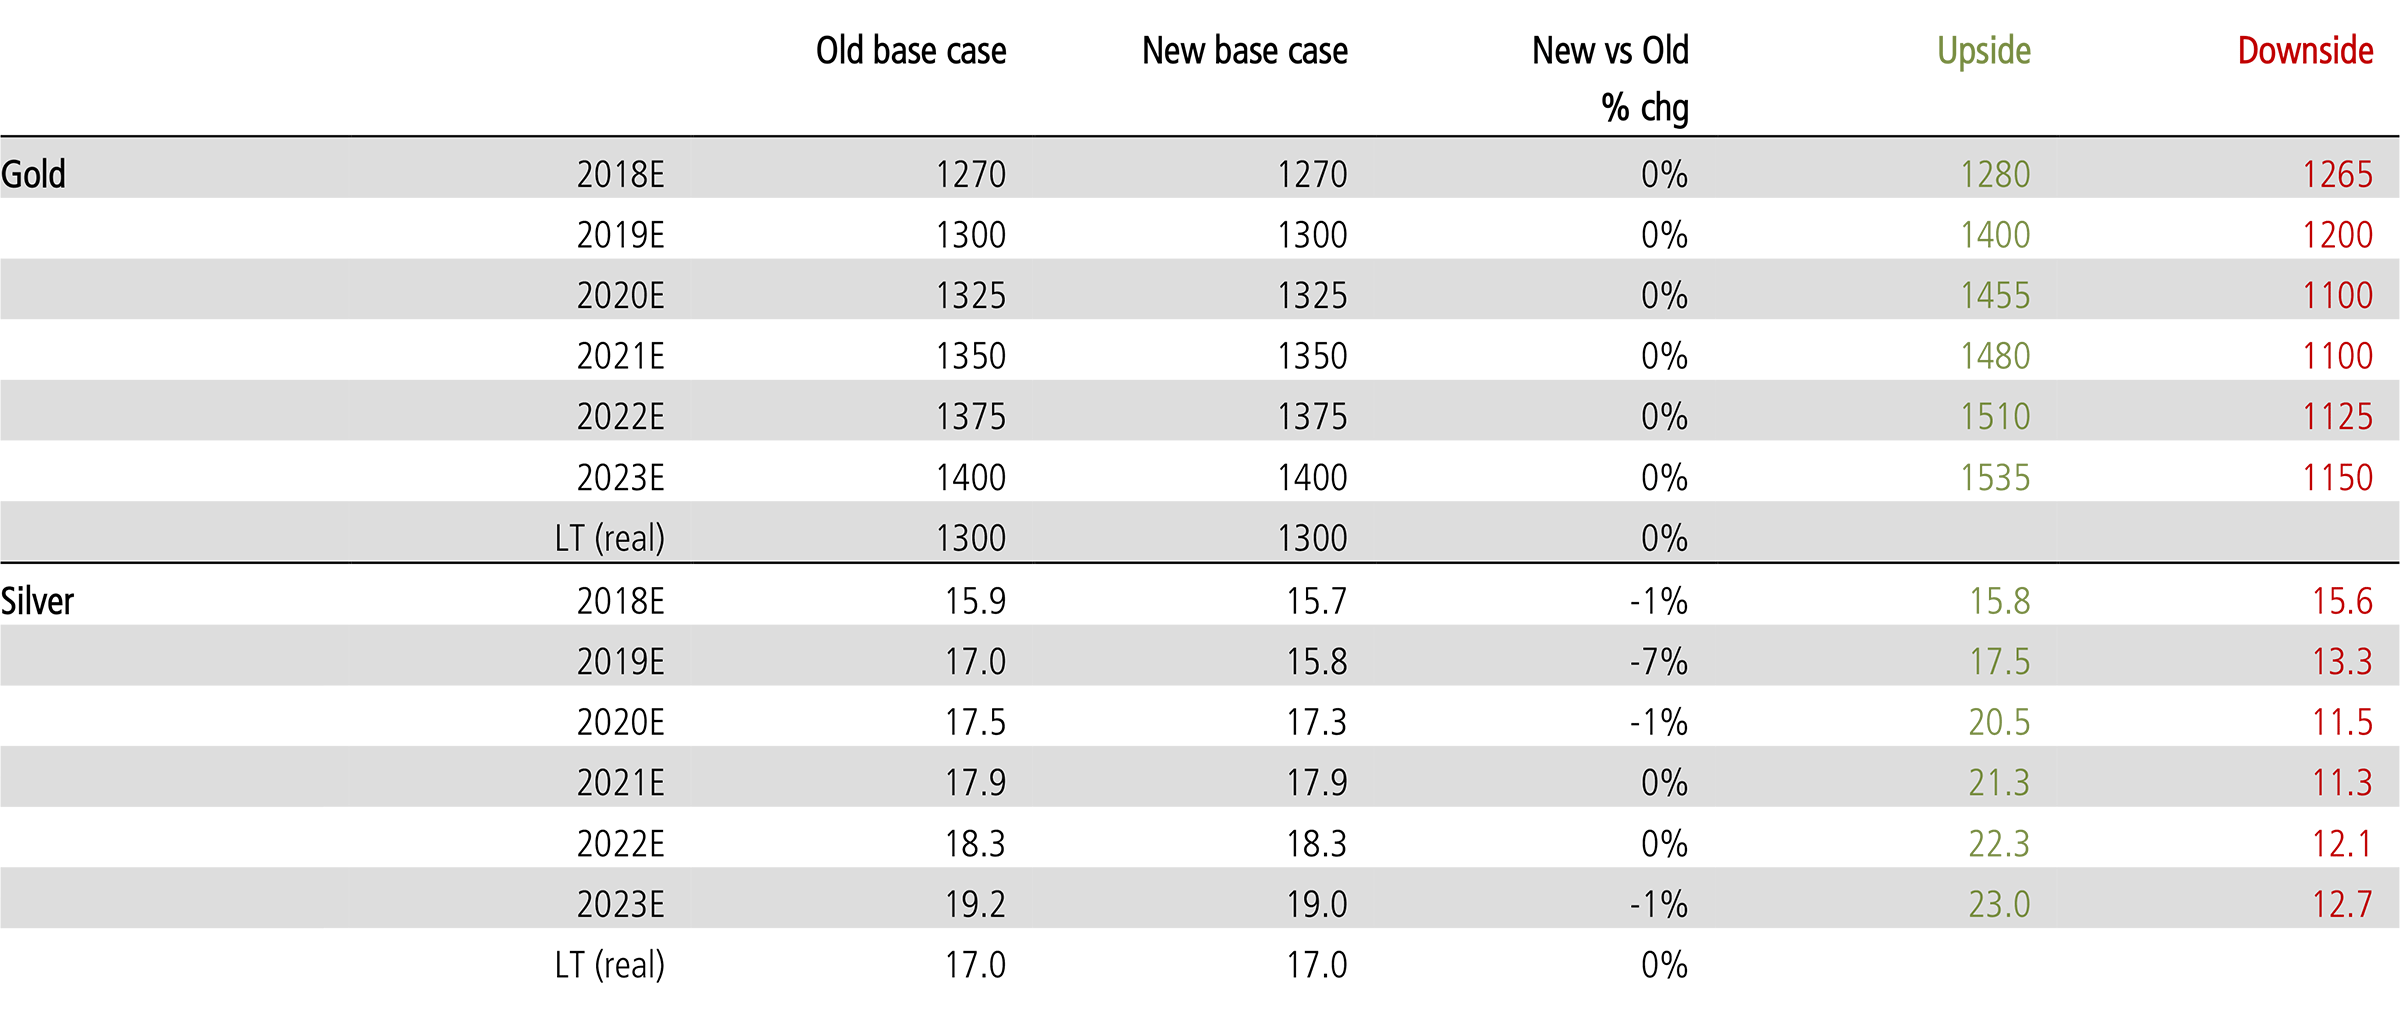 UBS precious metals forecasts and upside/downside scenarios. Source: UBS